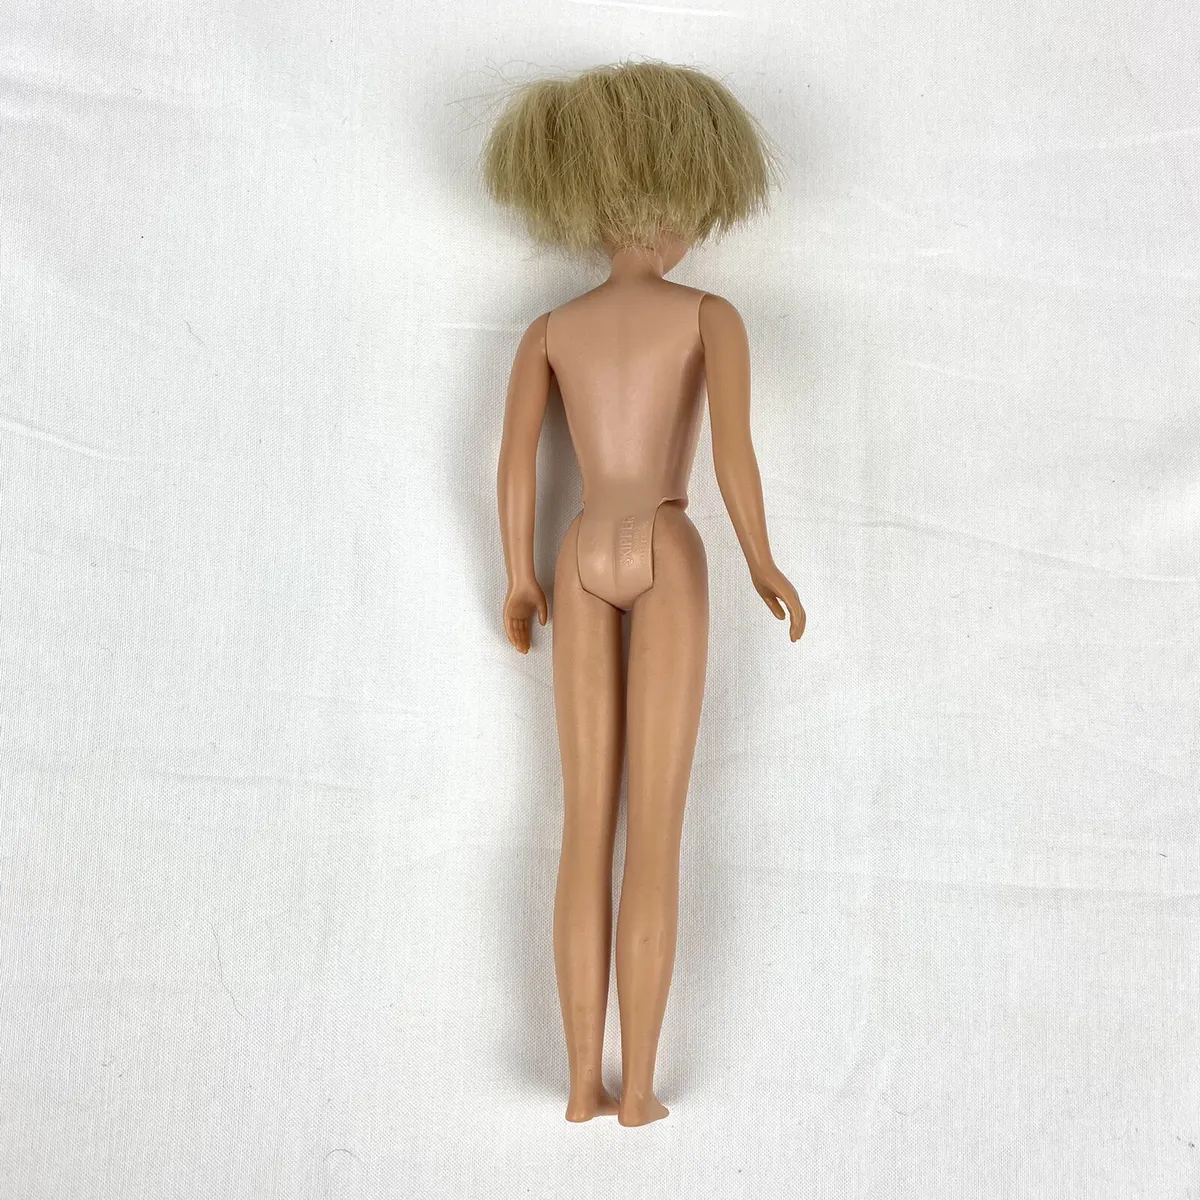 Buy the Vntg 1960s Mattel Barbie Skipper Doll Blonde Hair Straight Leg W/  Pnk Barbie Case